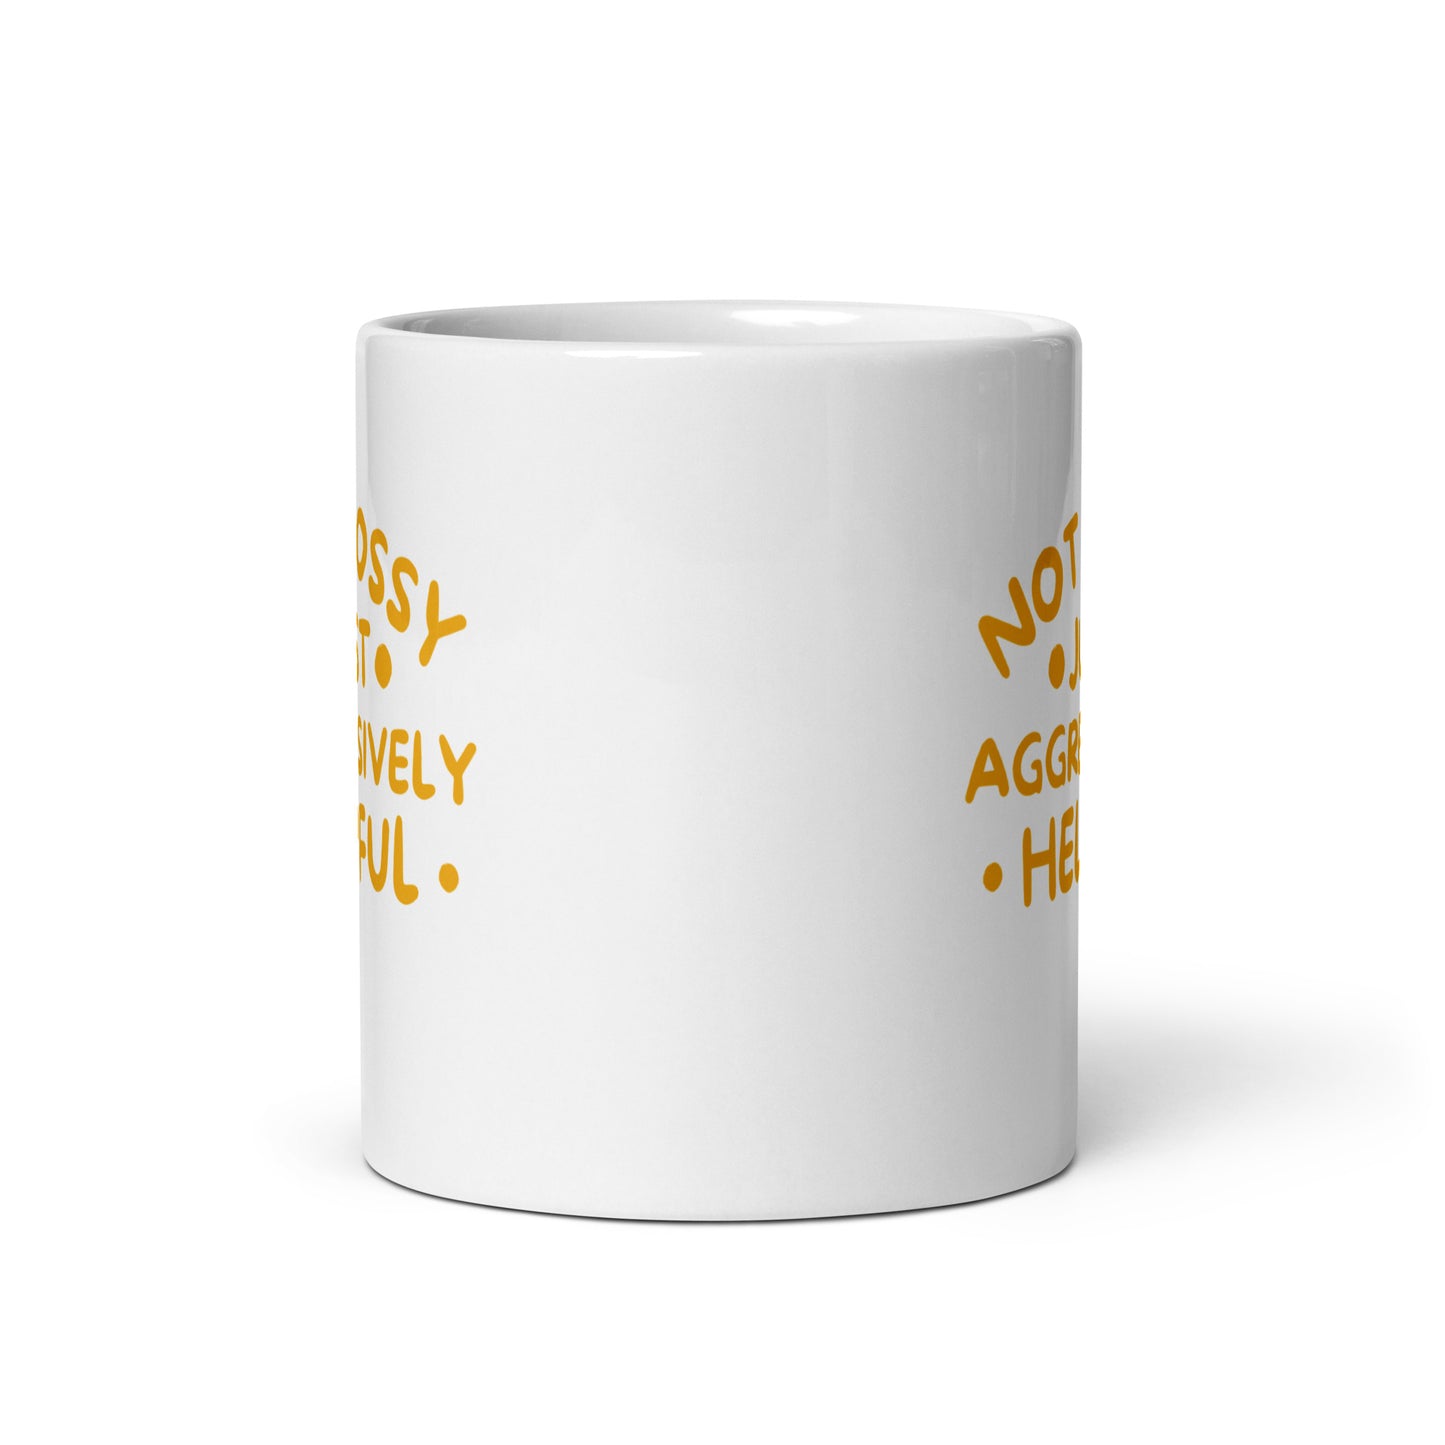 Not Bossy, Just Aggressively Helpful White Ceramic Coffee Mug